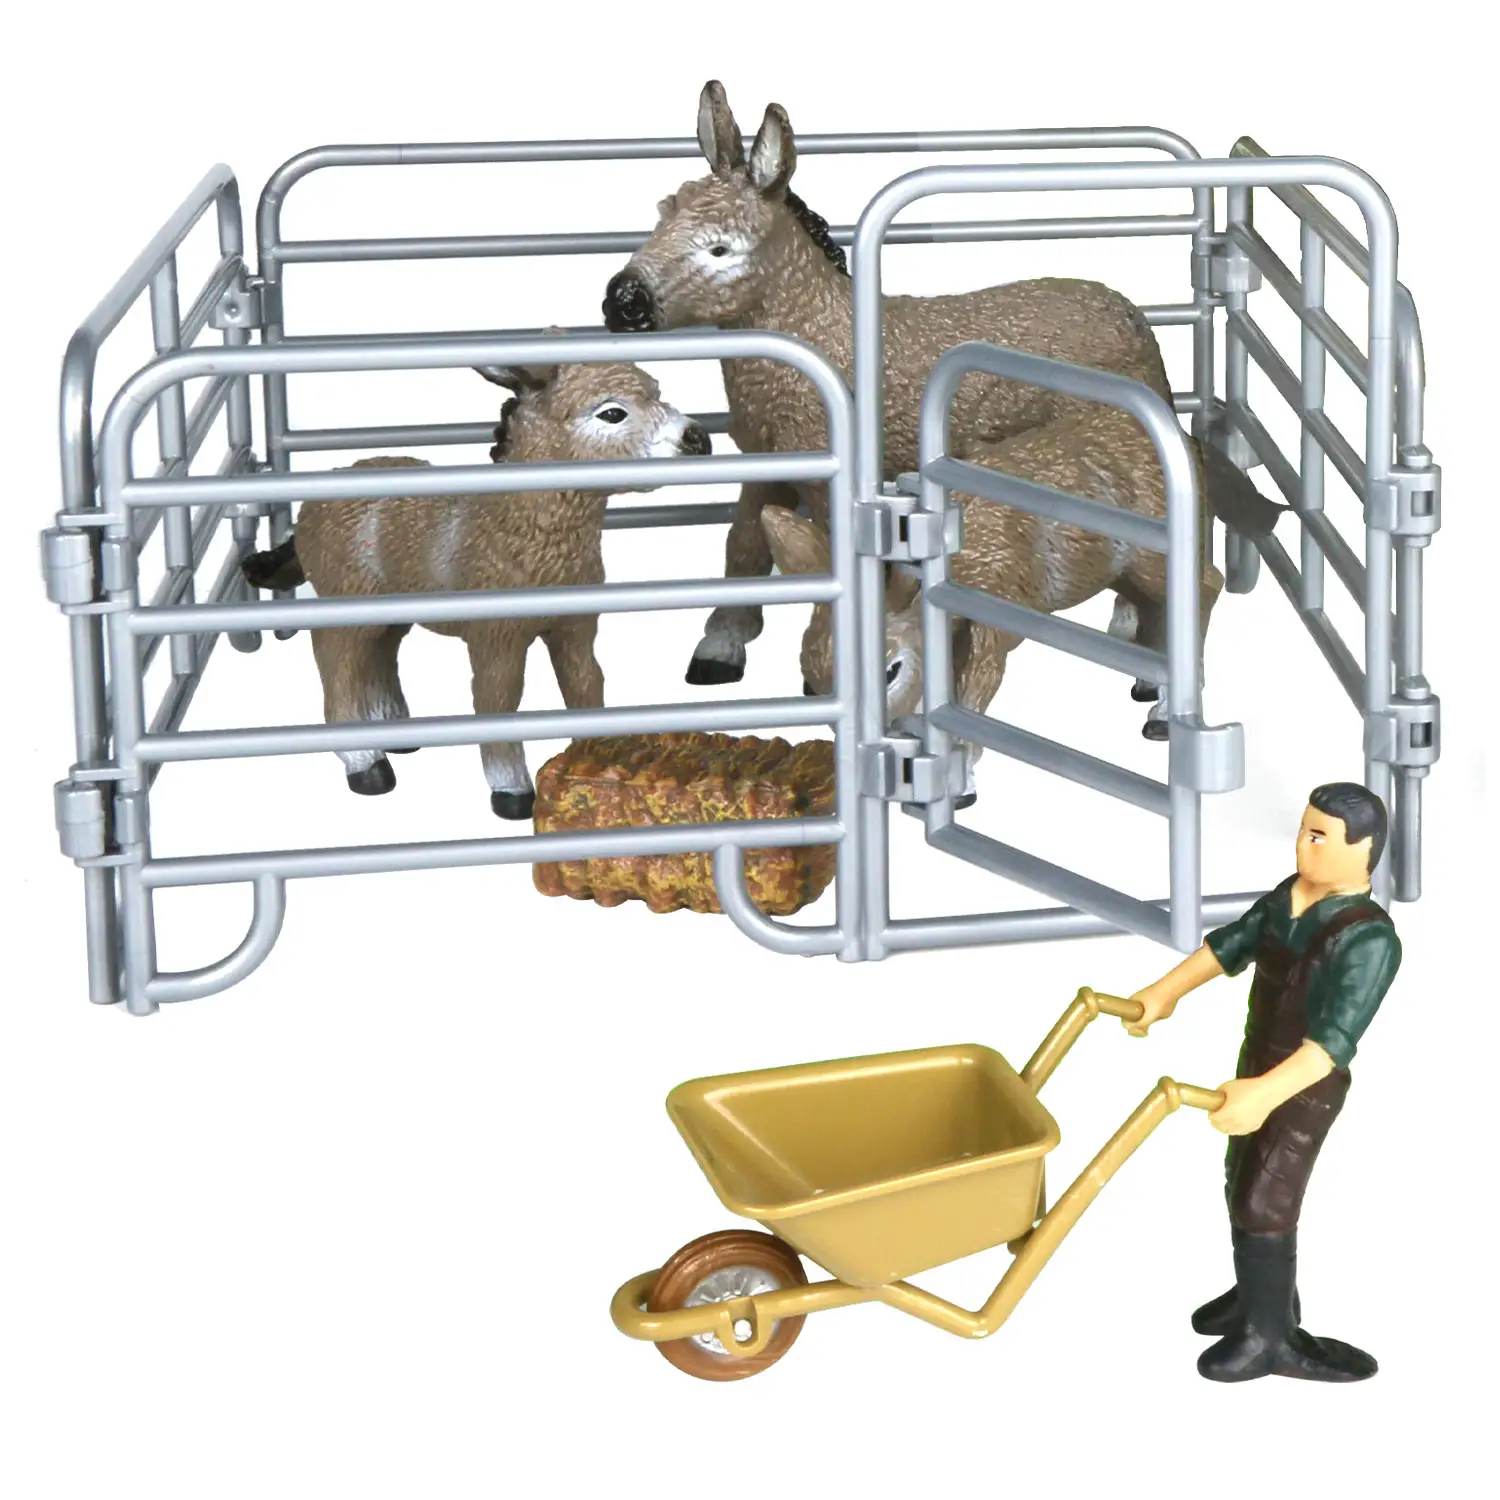 Barn Miniature Farm Farmer Donkey Animal figurine Model Toy Set con recinzione realistica